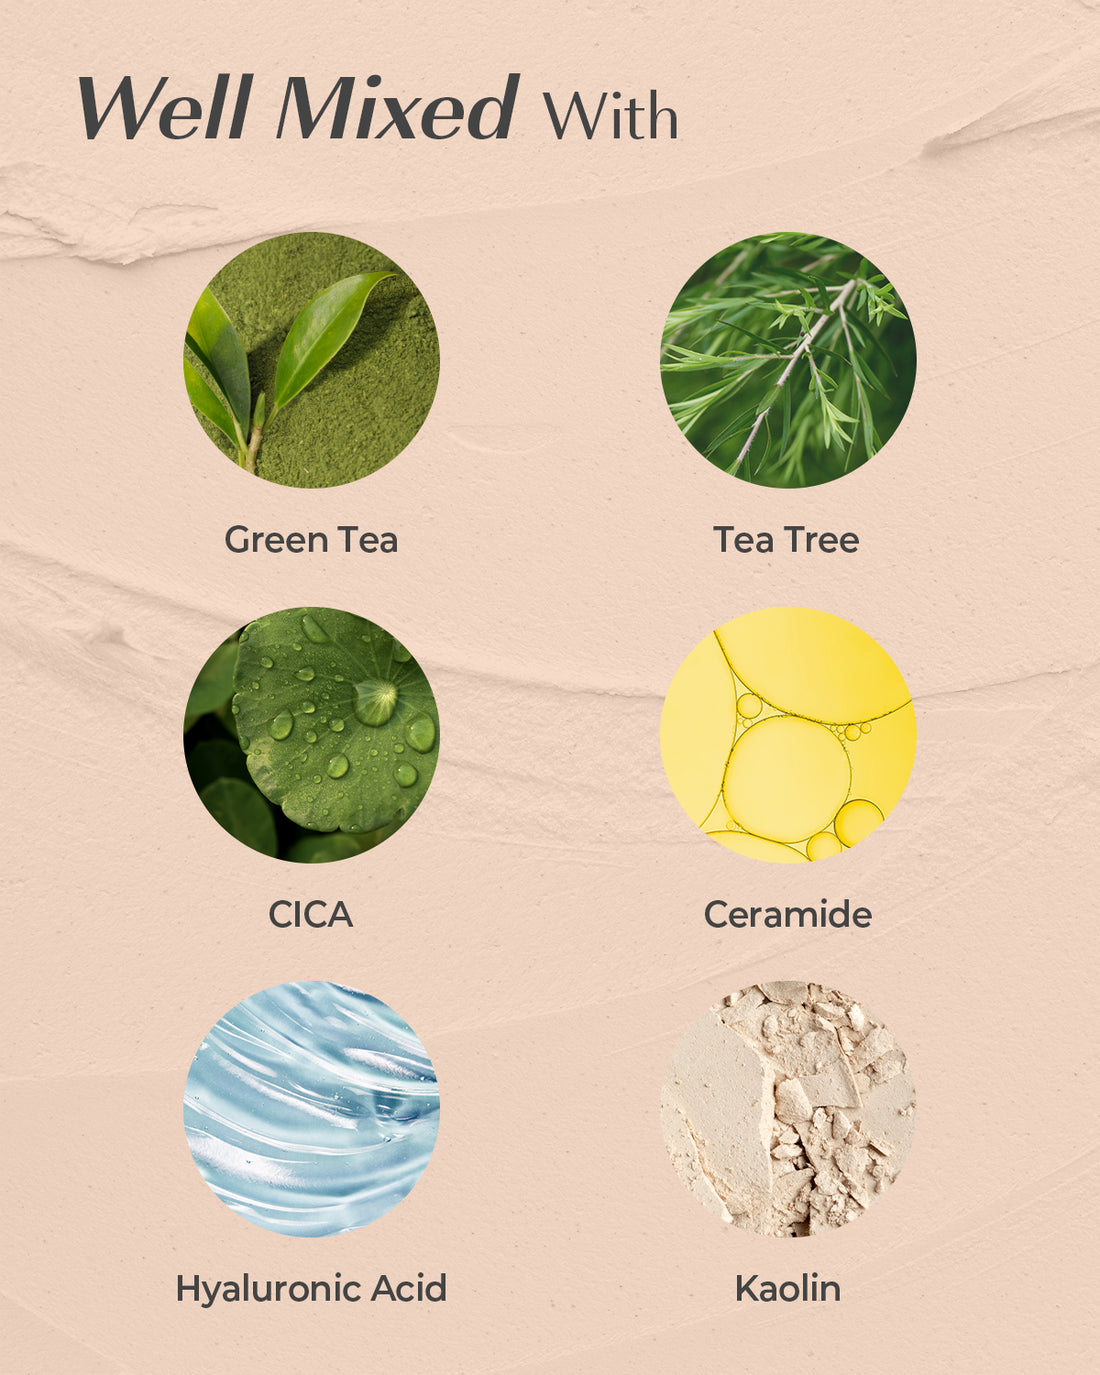 well mixed with green tea, tea tree, cica, ceramide, hyaluronic acid, kaolin